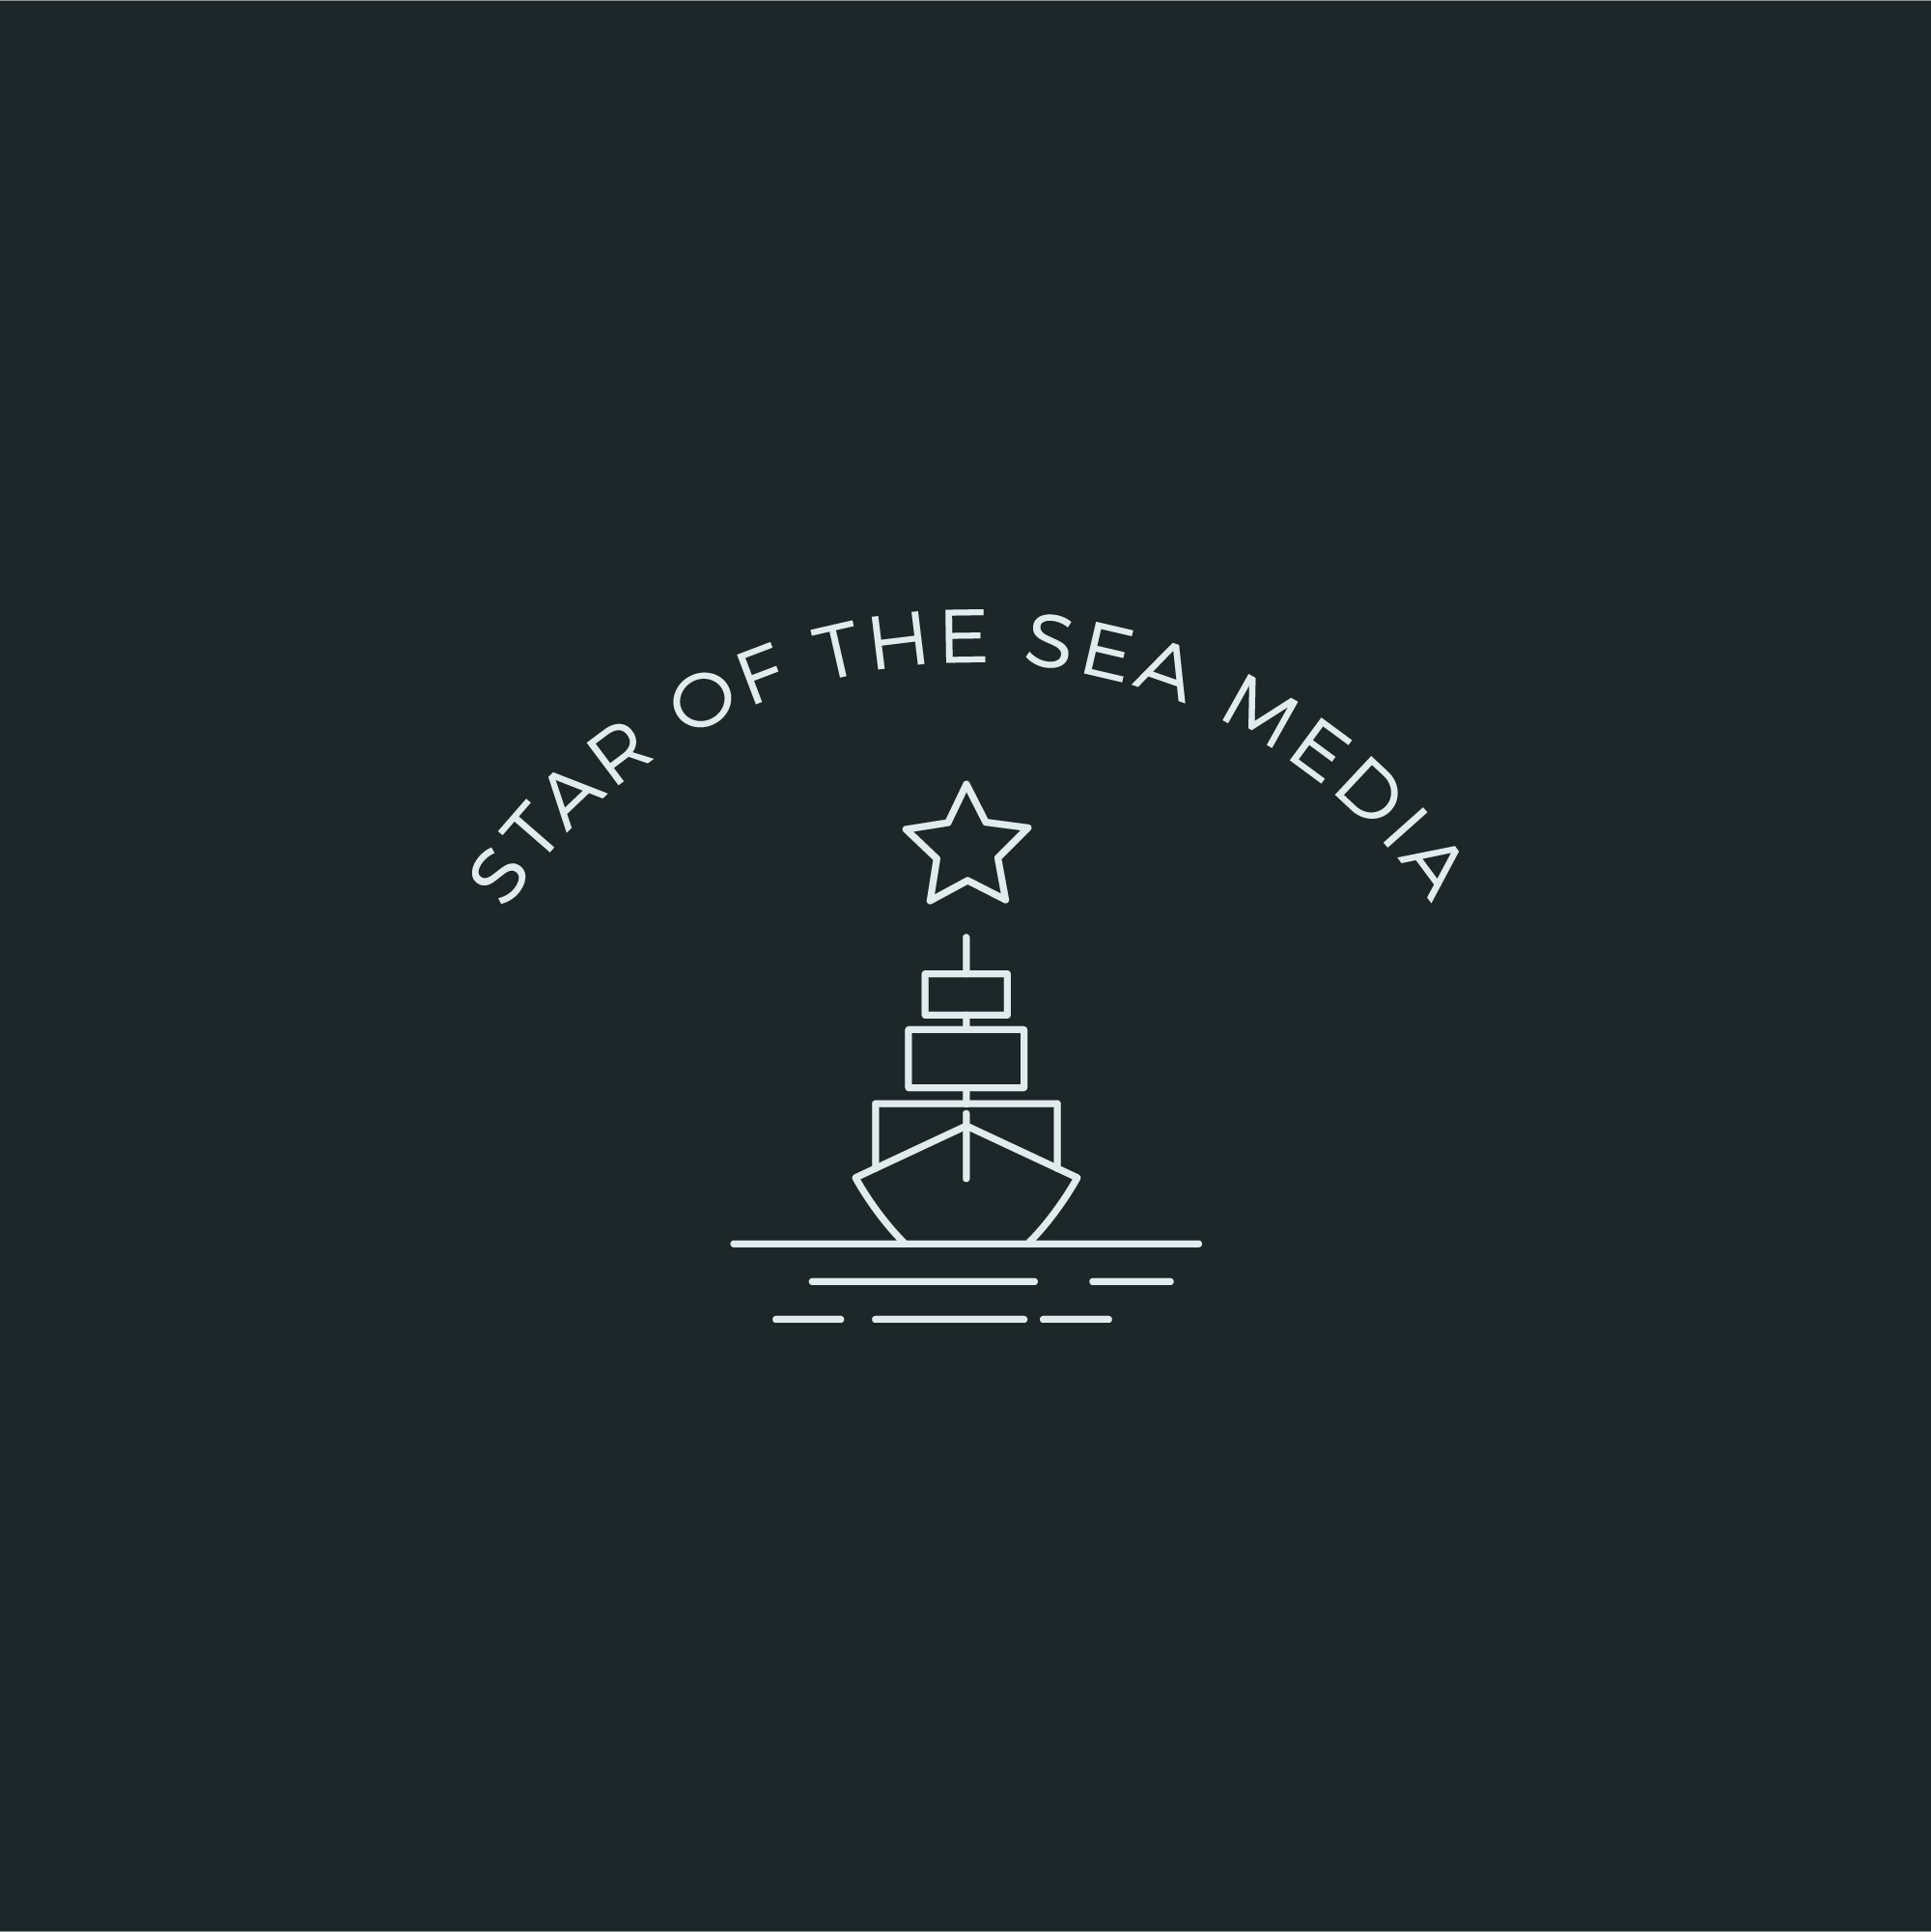 Star of the Sea Media LLC